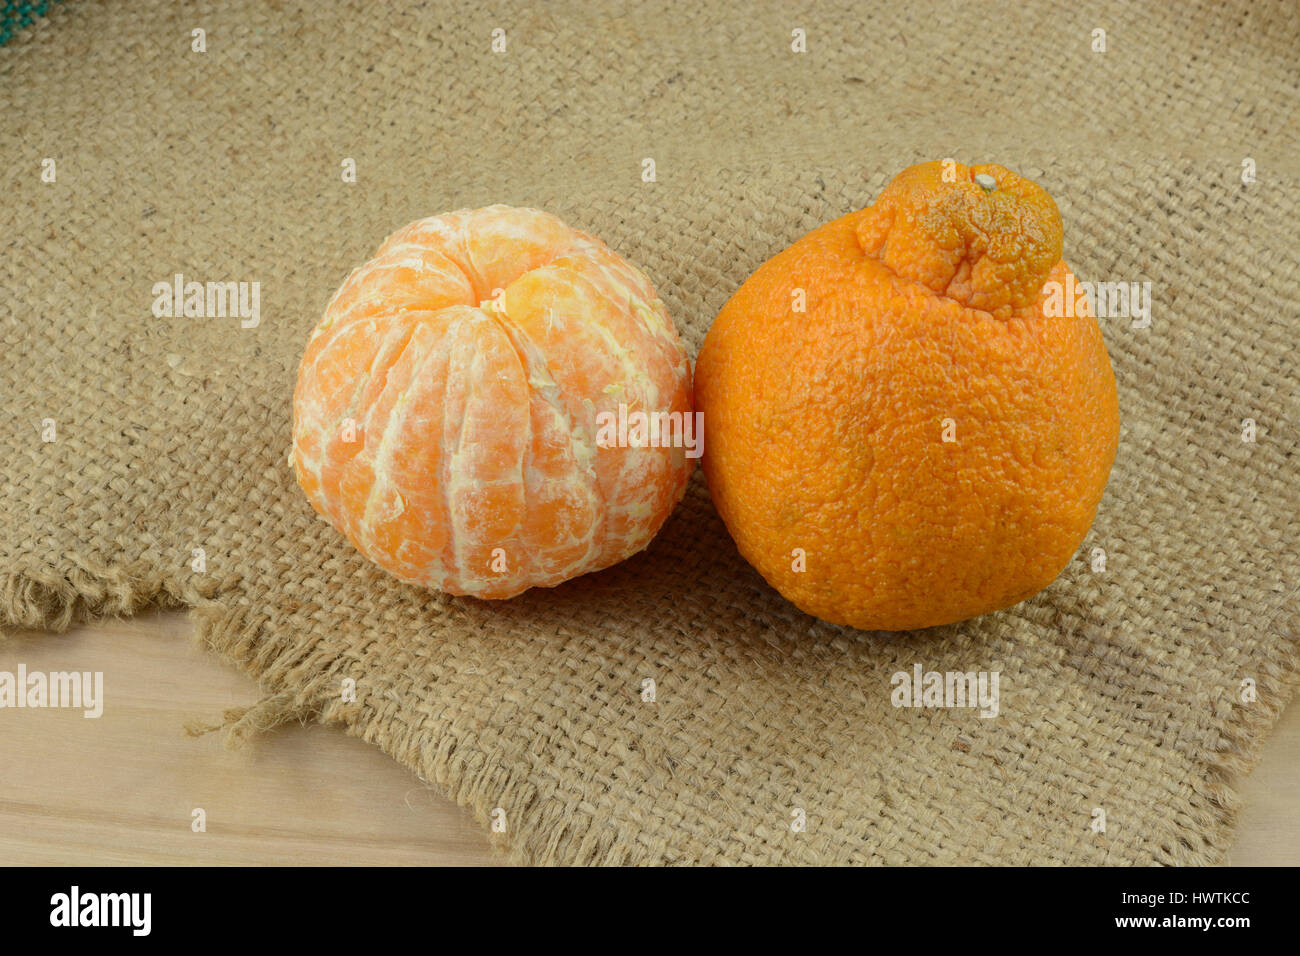 Sweet seedless peeled and unpeeled Dekopon mandarin oranges on burlap Stock Photo